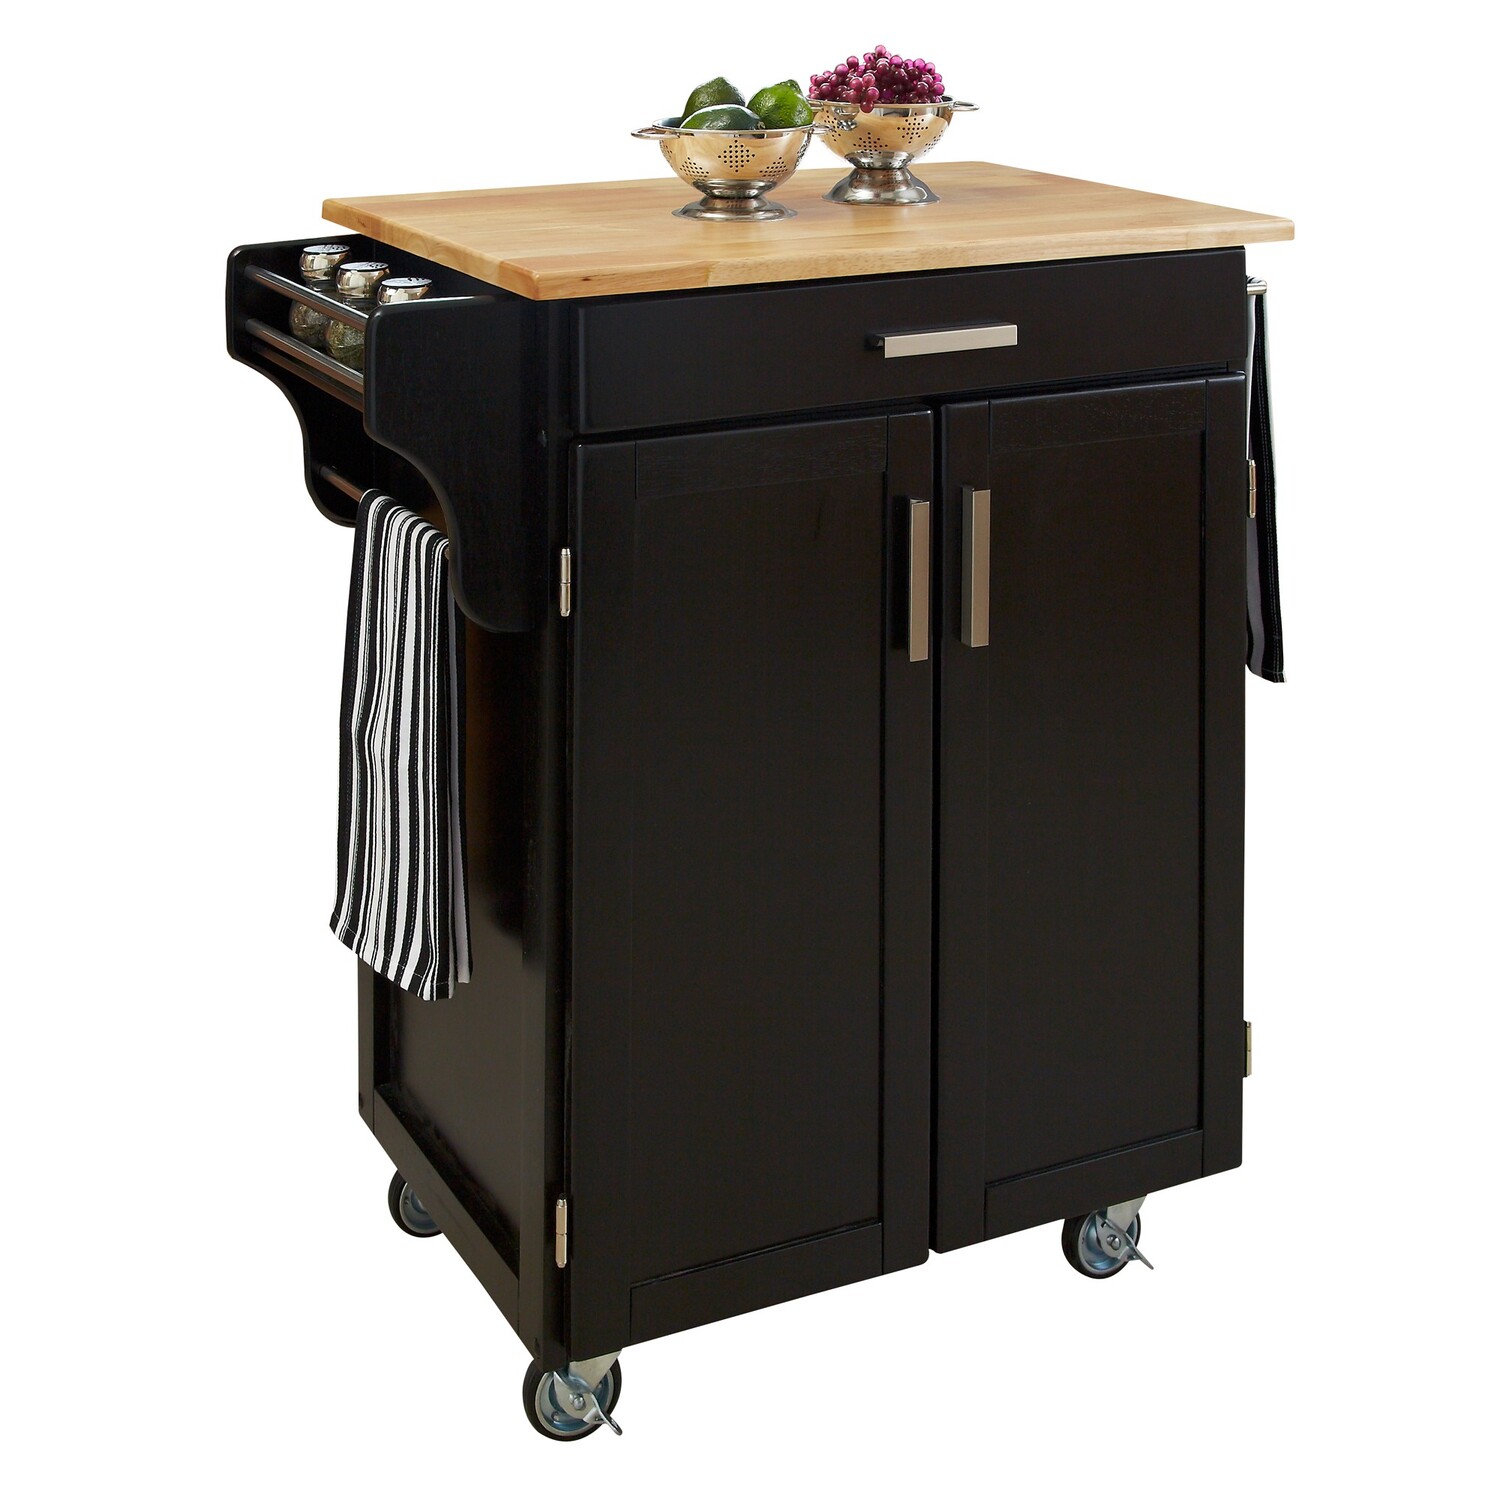 Homestyles Cuisine Cart Black Wood Kitchen Cart-Finish:Black,Option:Wood Top - image 1 of 9